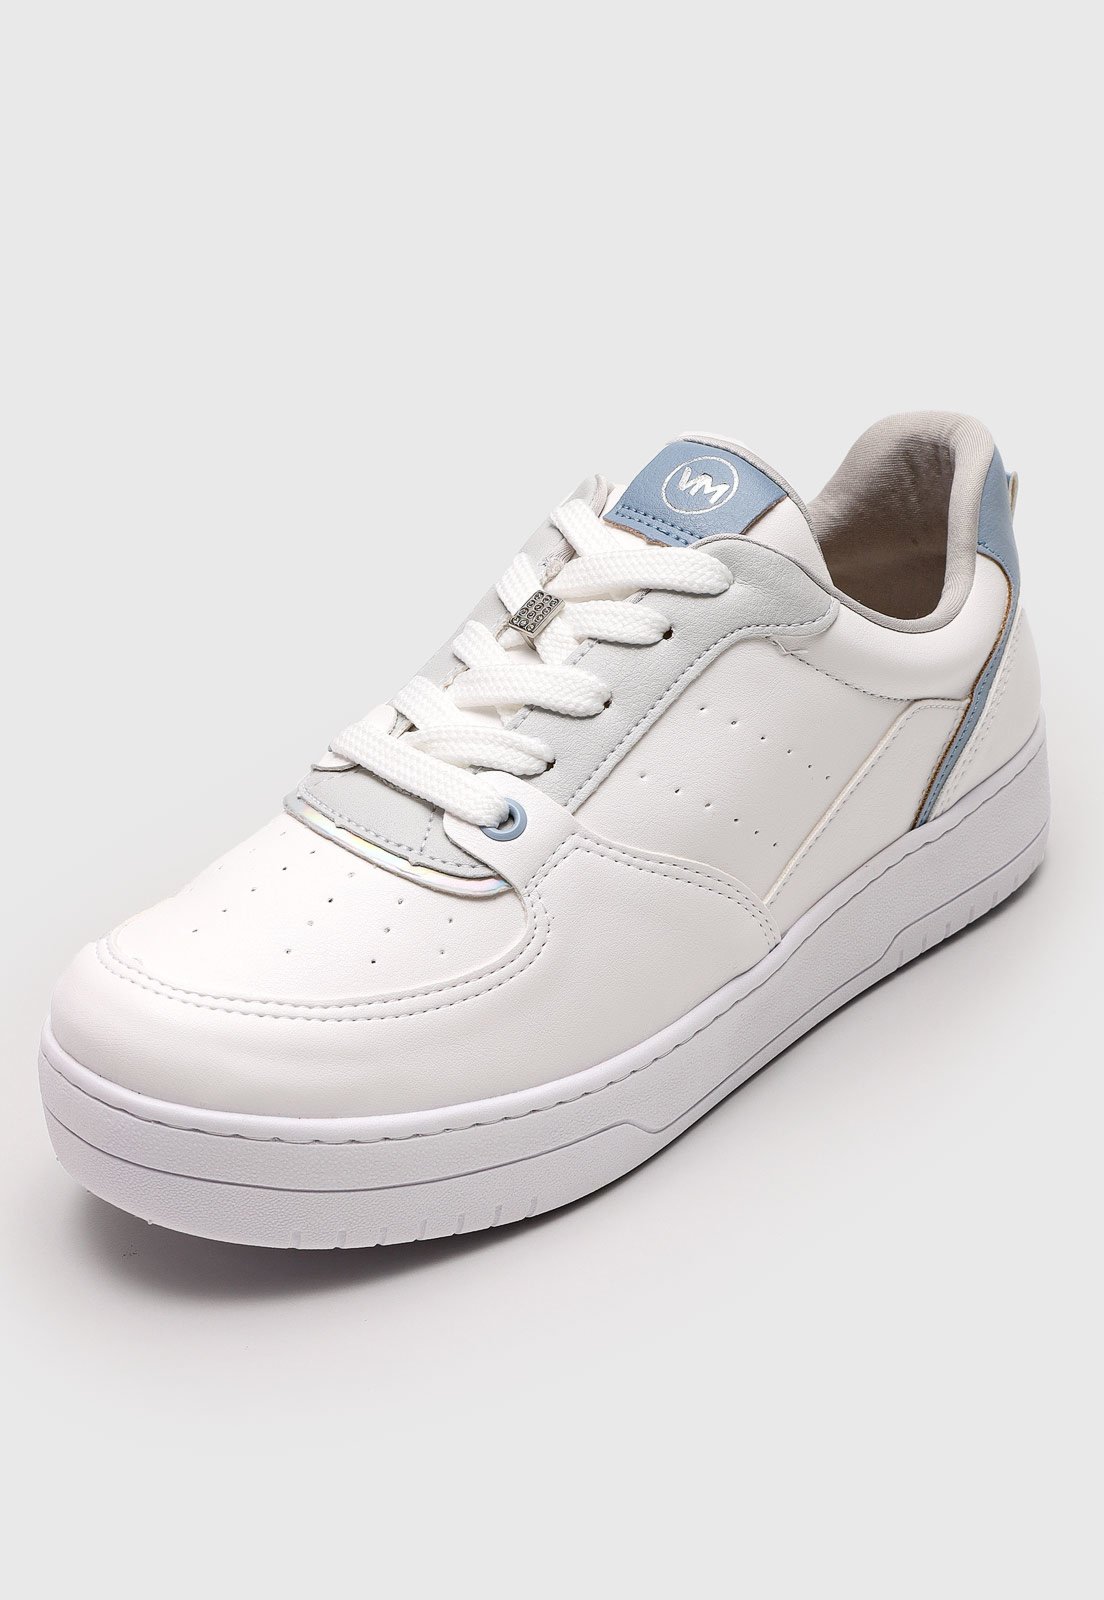 Tênis Dafiti Shoes Recortes Branco - Compre Agora